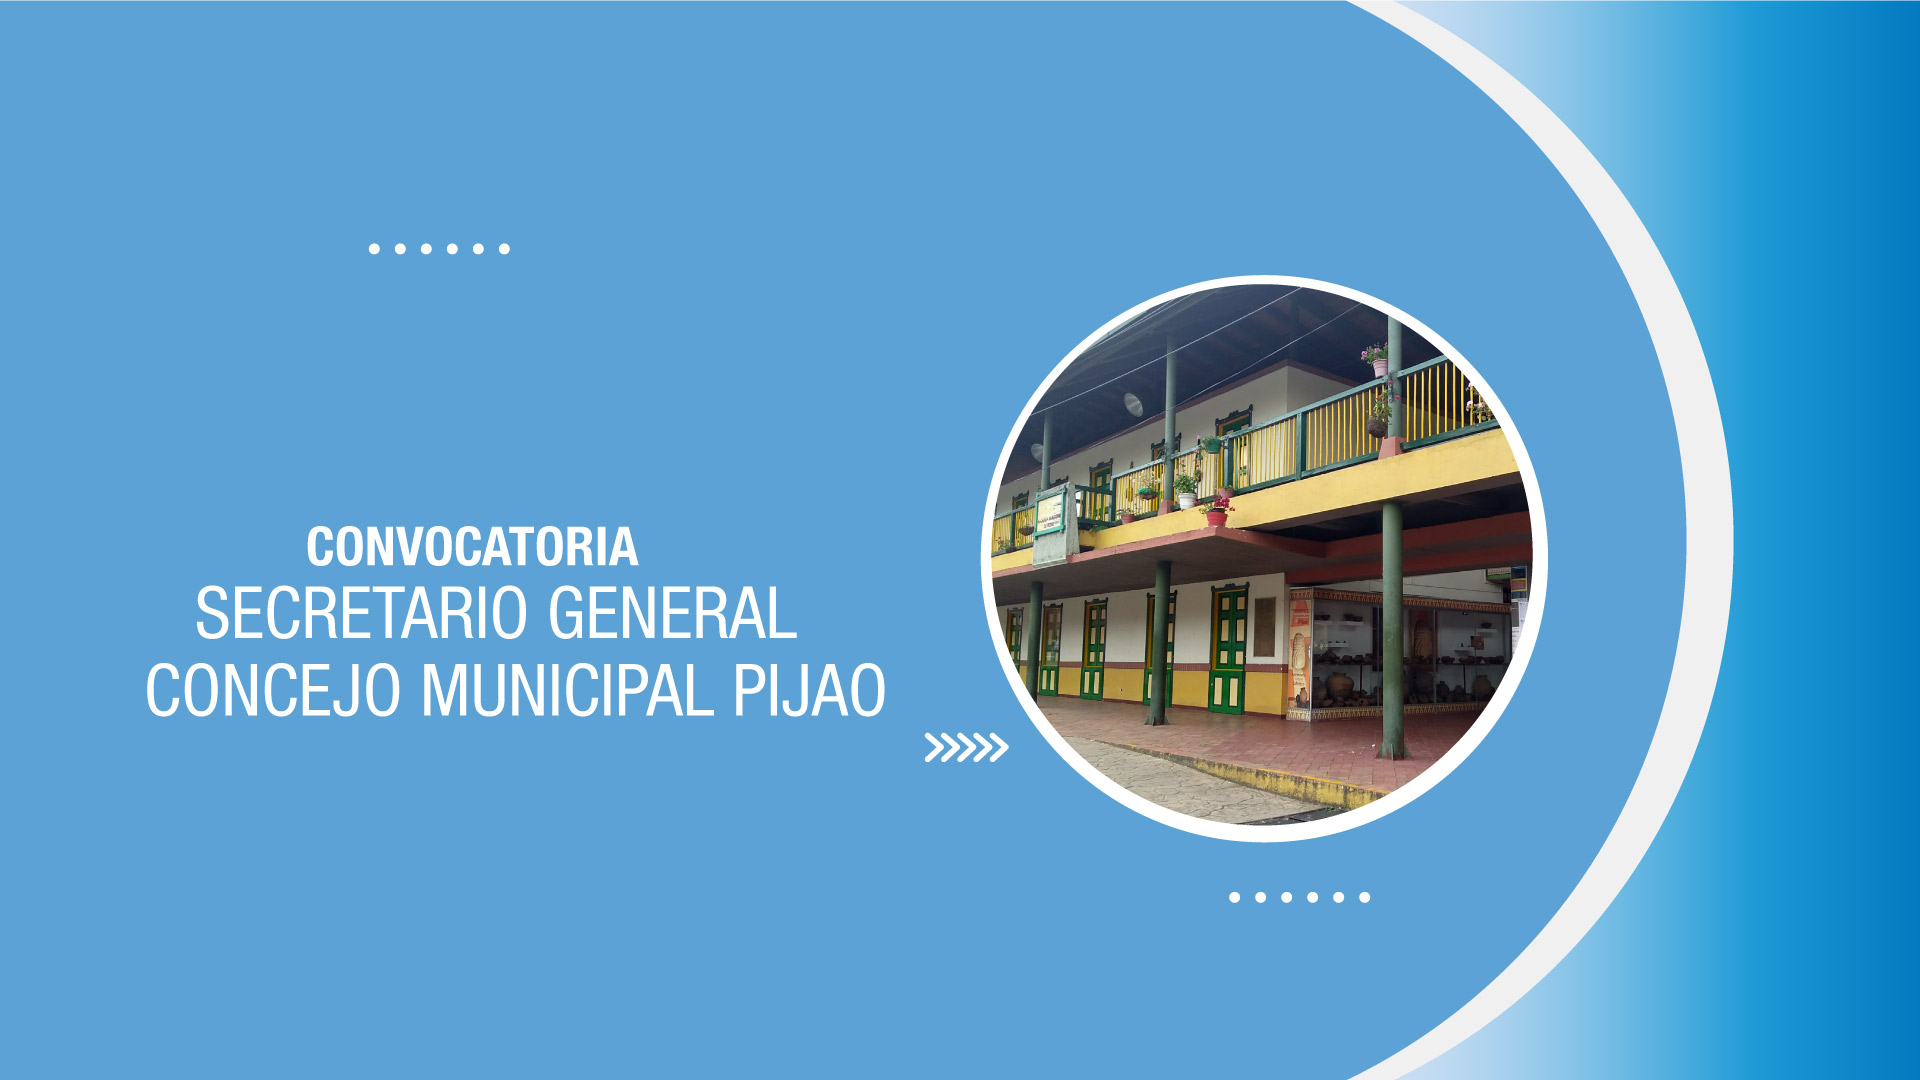 Convocatoria: Secretario General del Concejo Municipal de Pijao